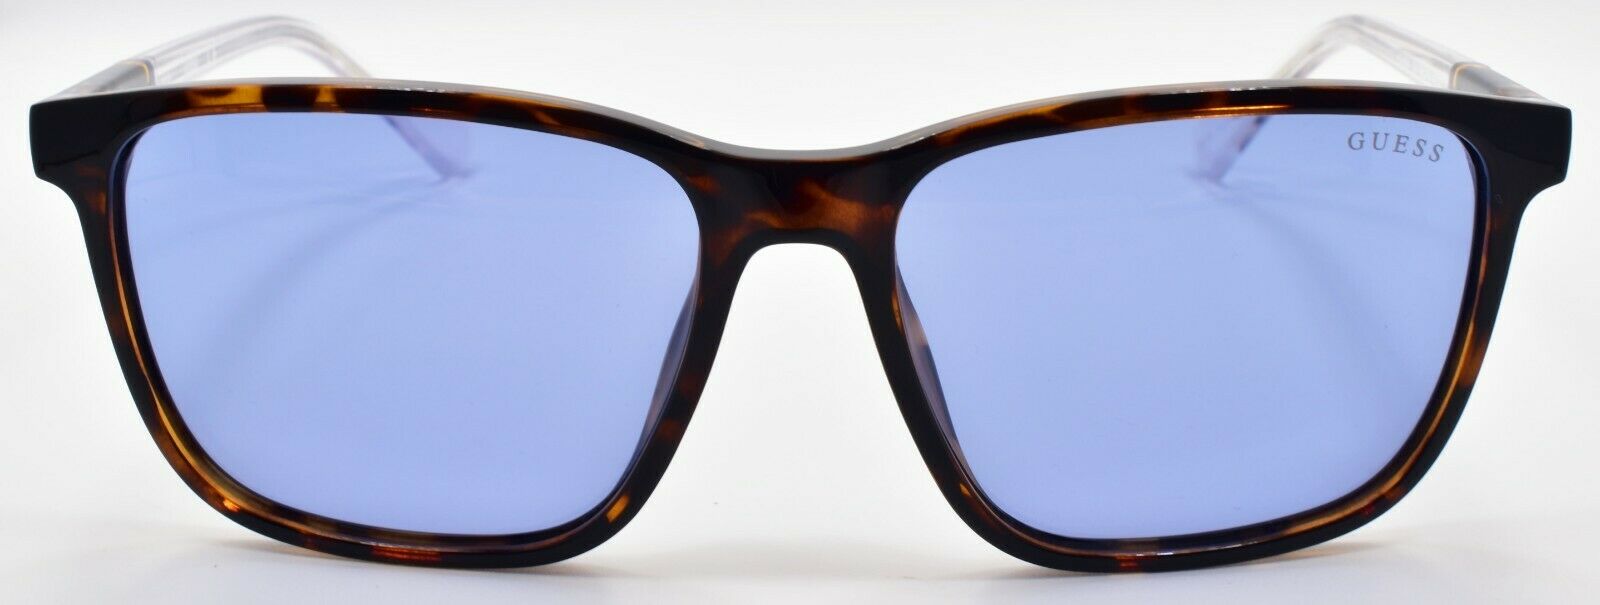 1-GUESS GU6944 52V Men's Sunglasses 56-16-145 Dark Havana / Blue-889214044846-IKSpecs